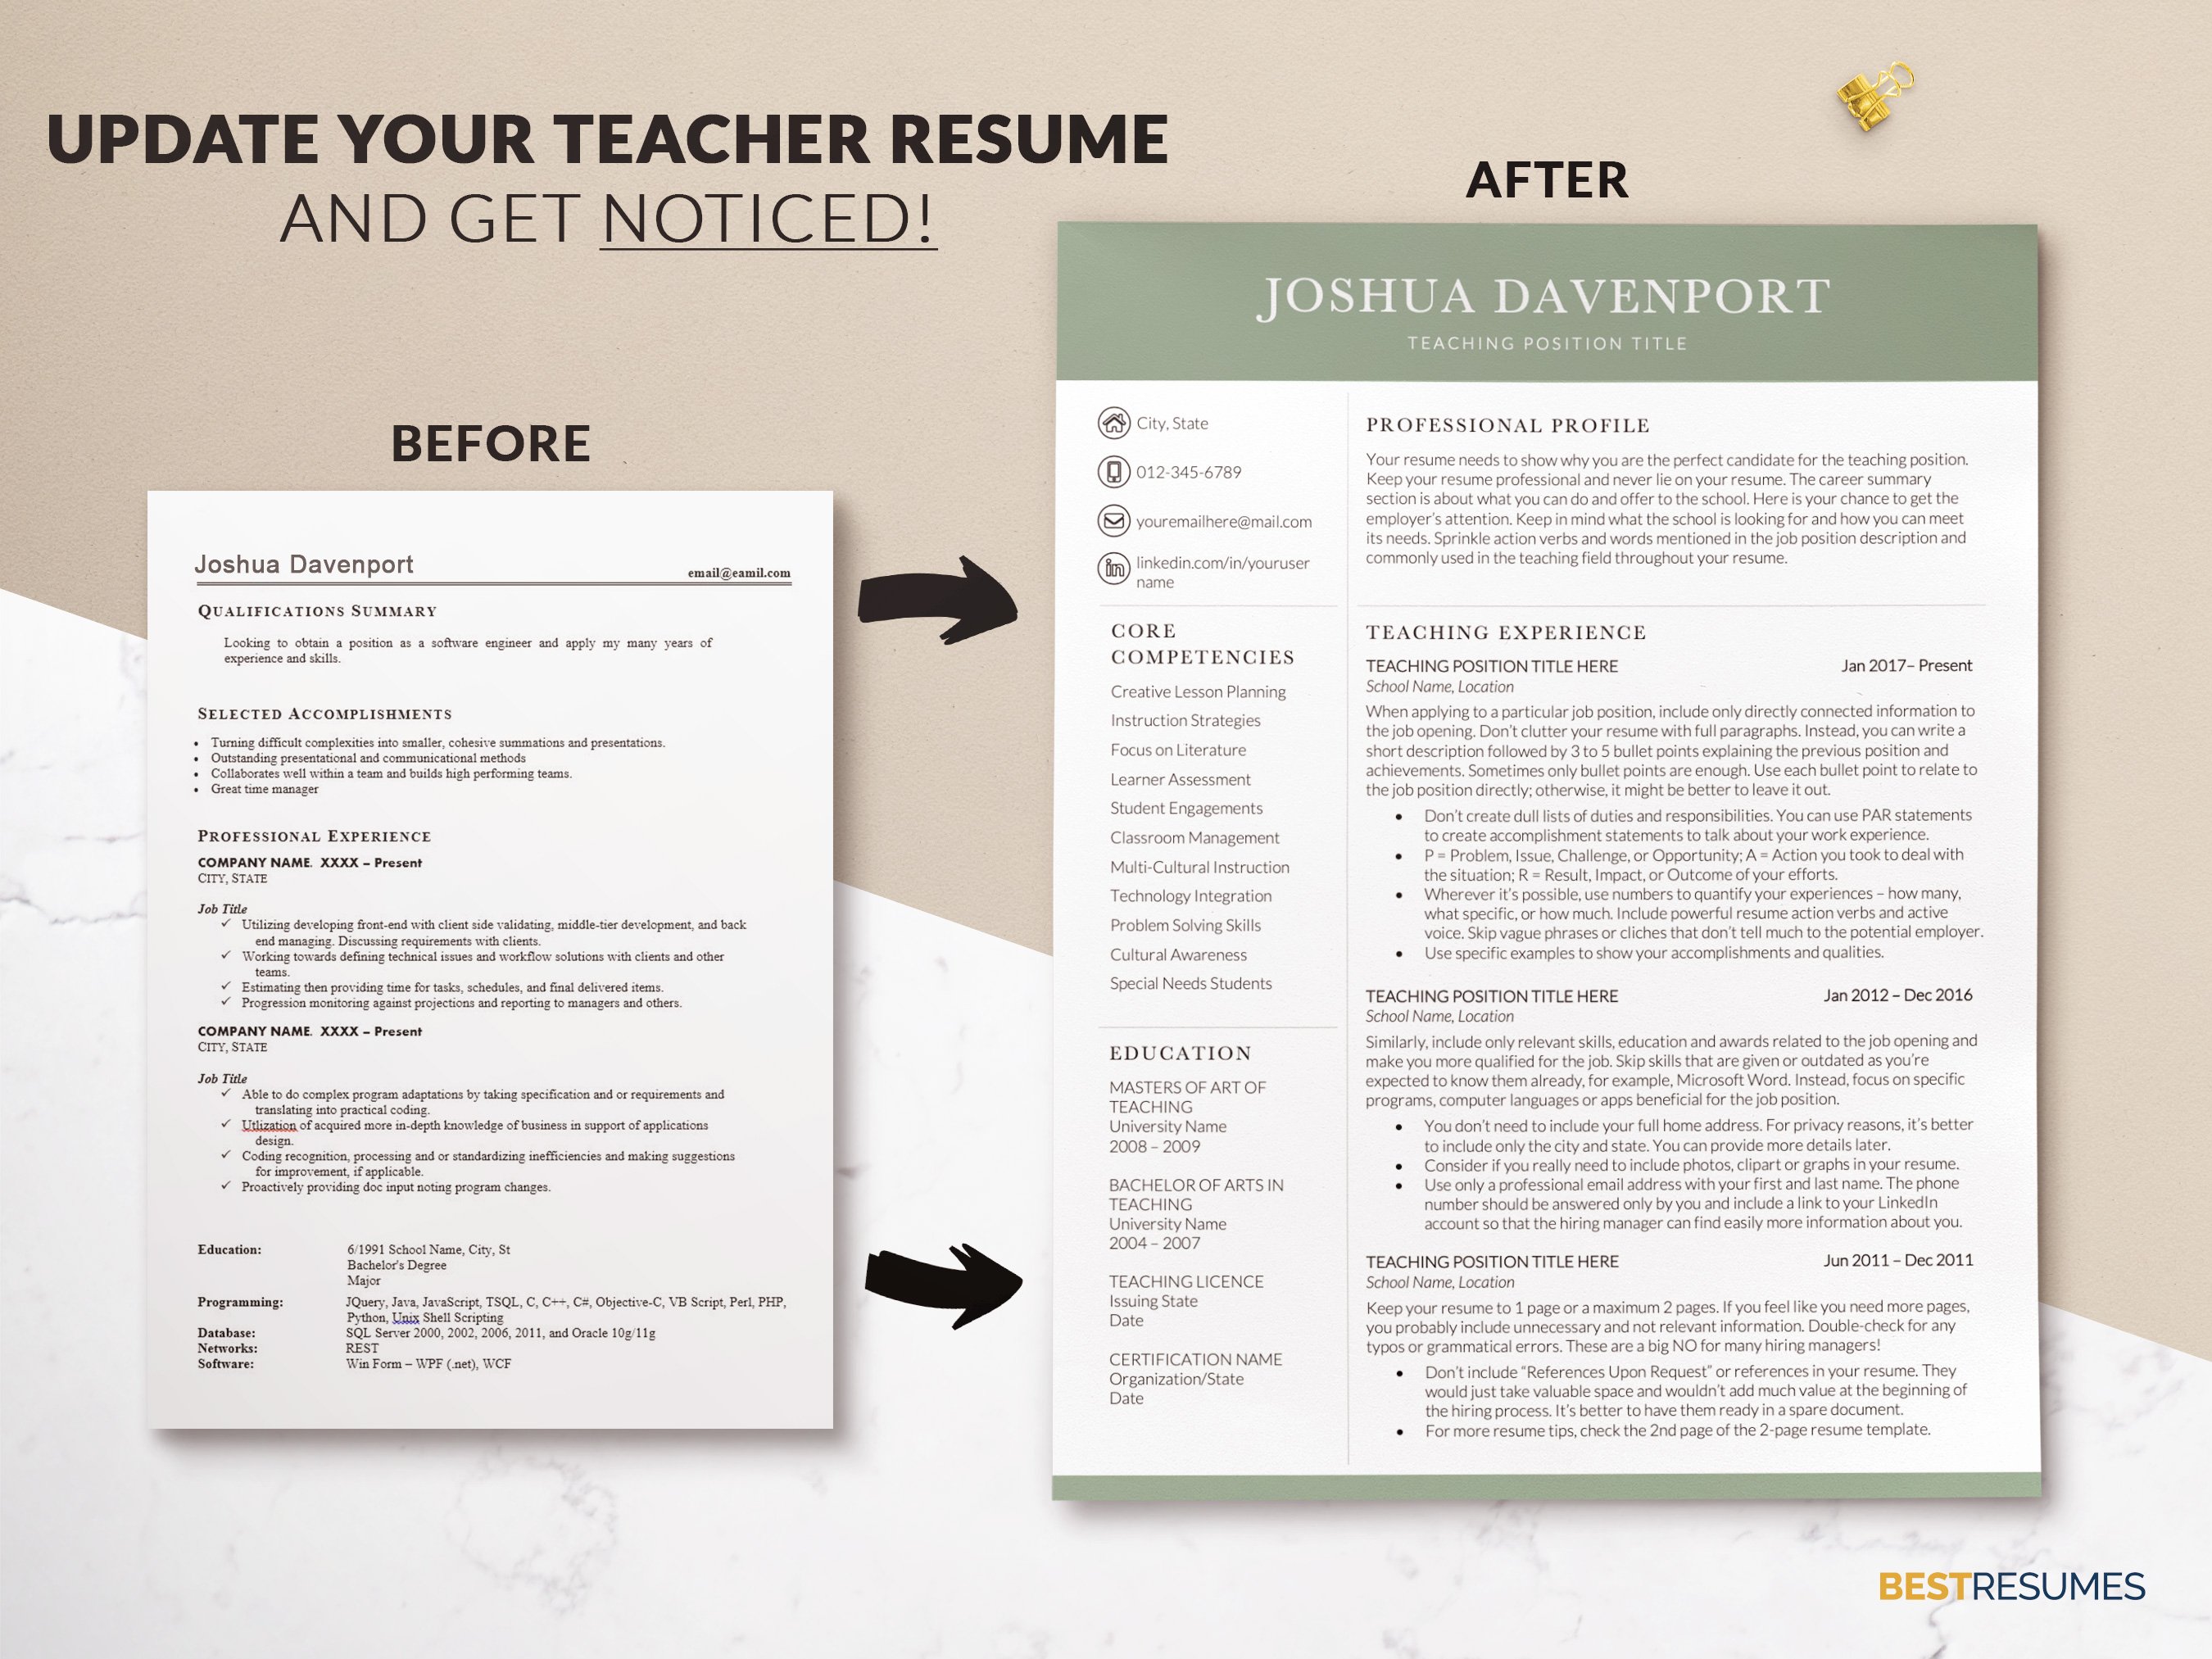 professional resume for teachers template update your resume joshua davenport 849